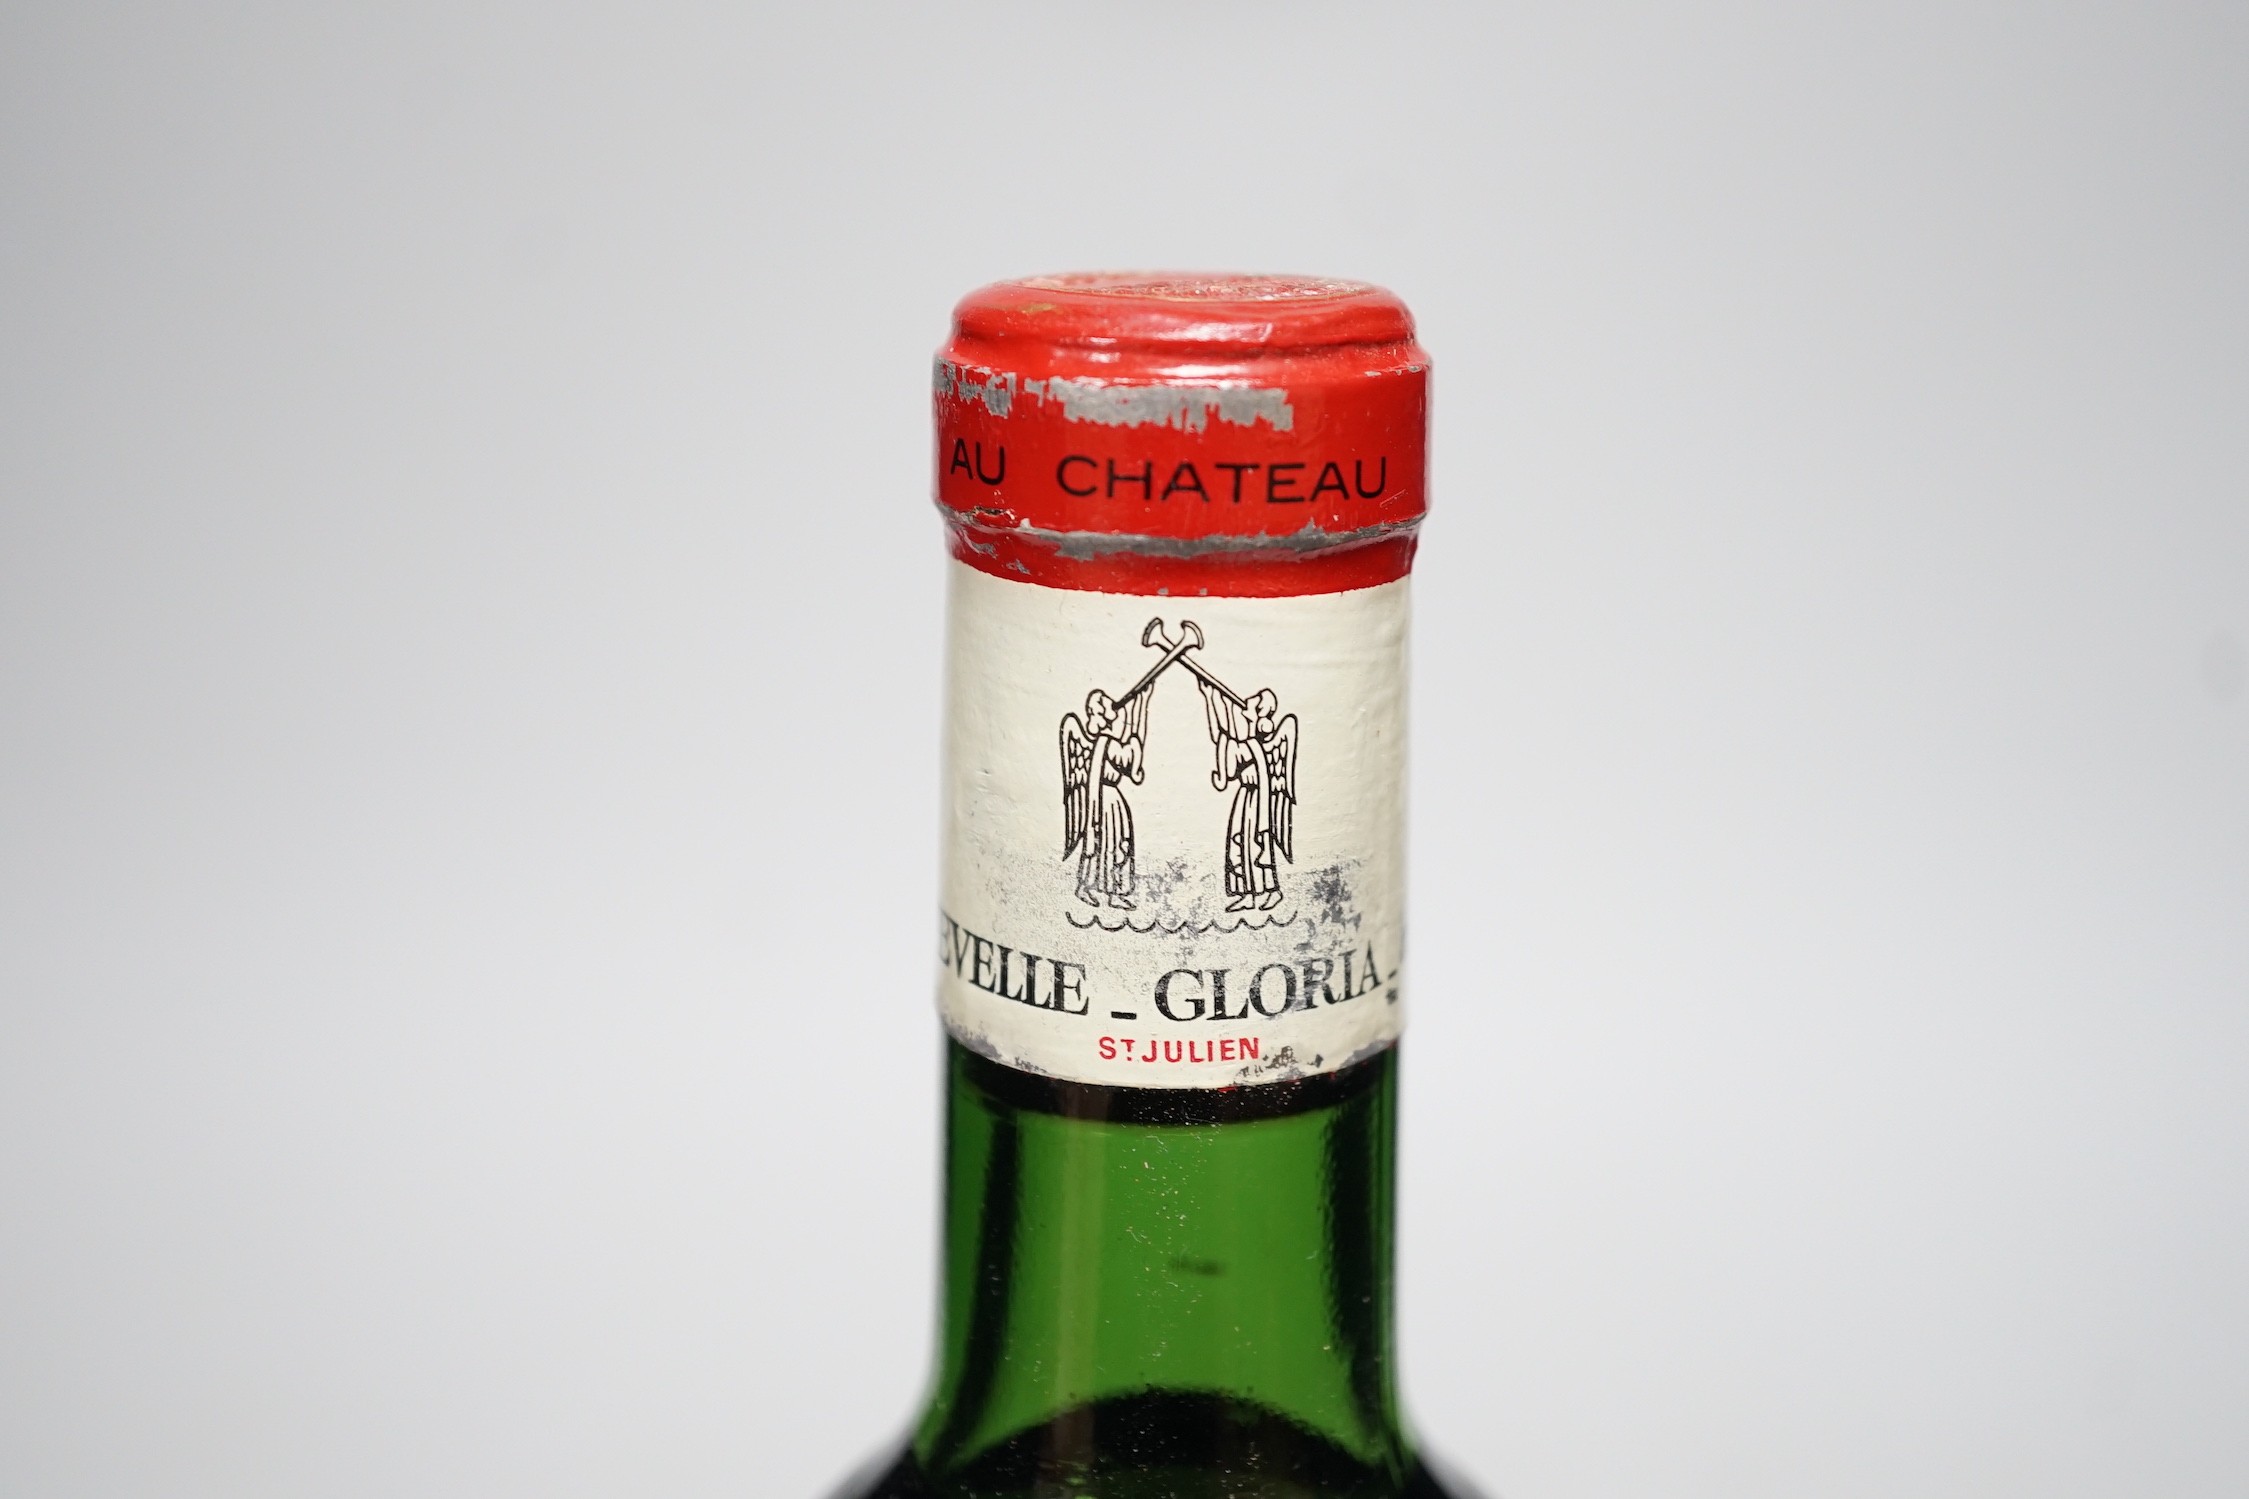 Eight bottles of Chateau Haut Beychevelle Gloria, 1971